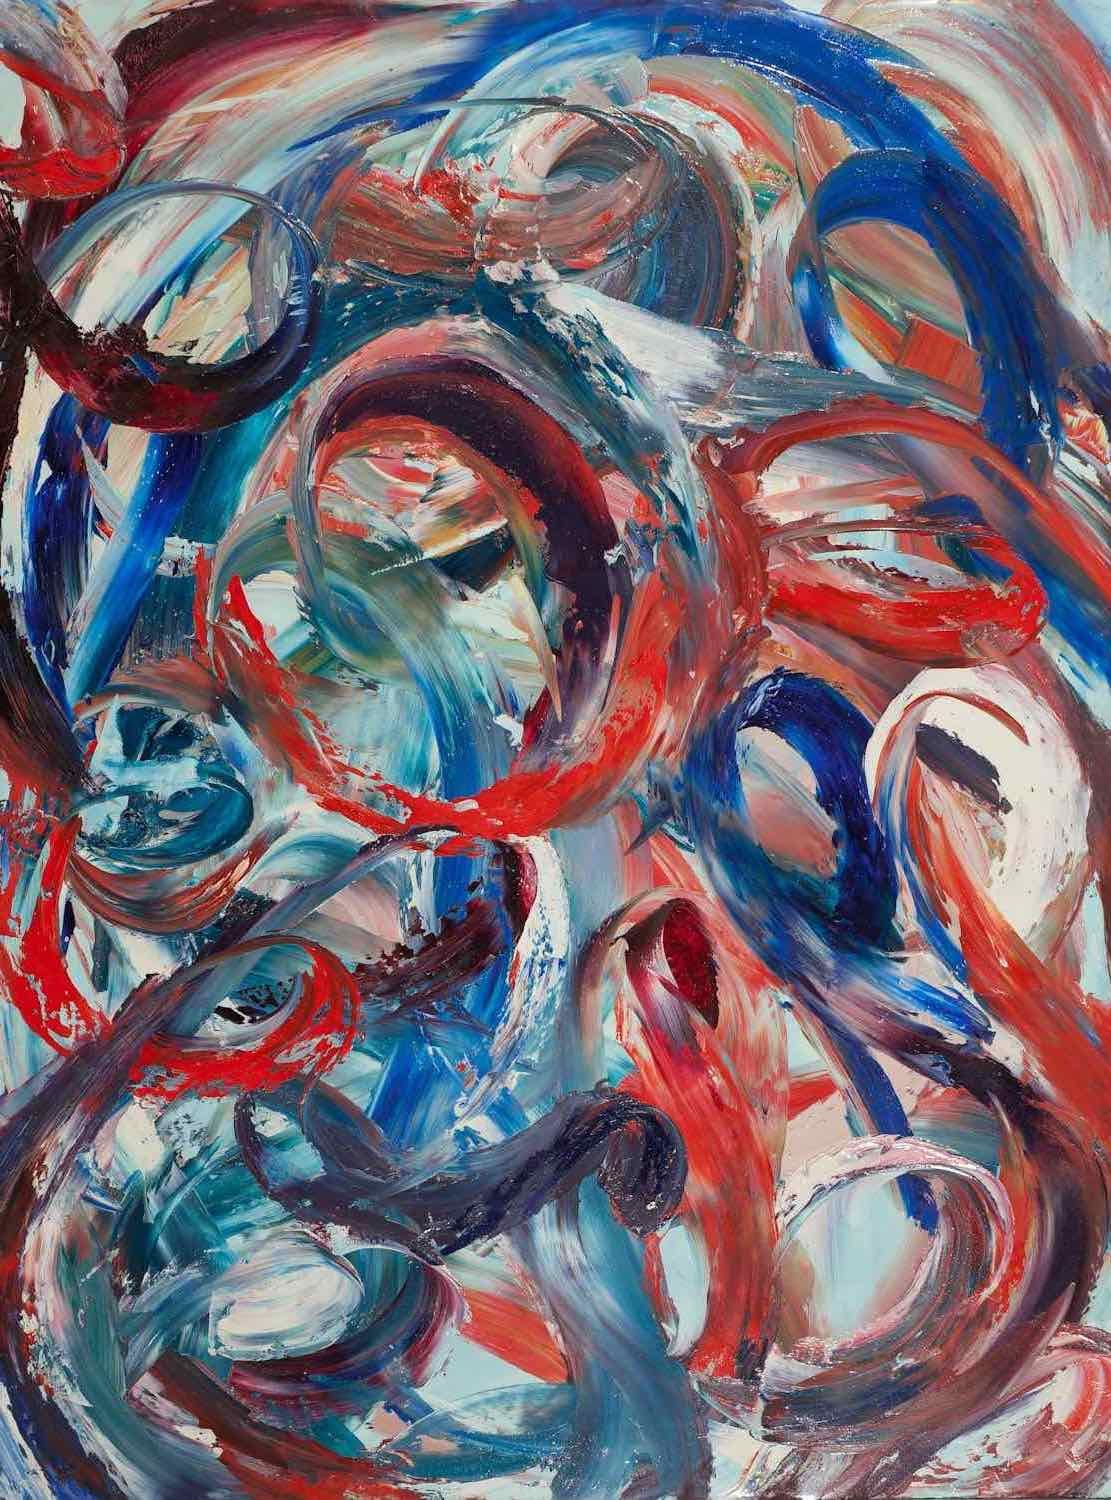 Jill Krutick,&amp;nbsp;Victory Day, 2023

Oil on Canvas,&amp;nbsp;30 x 40 inches